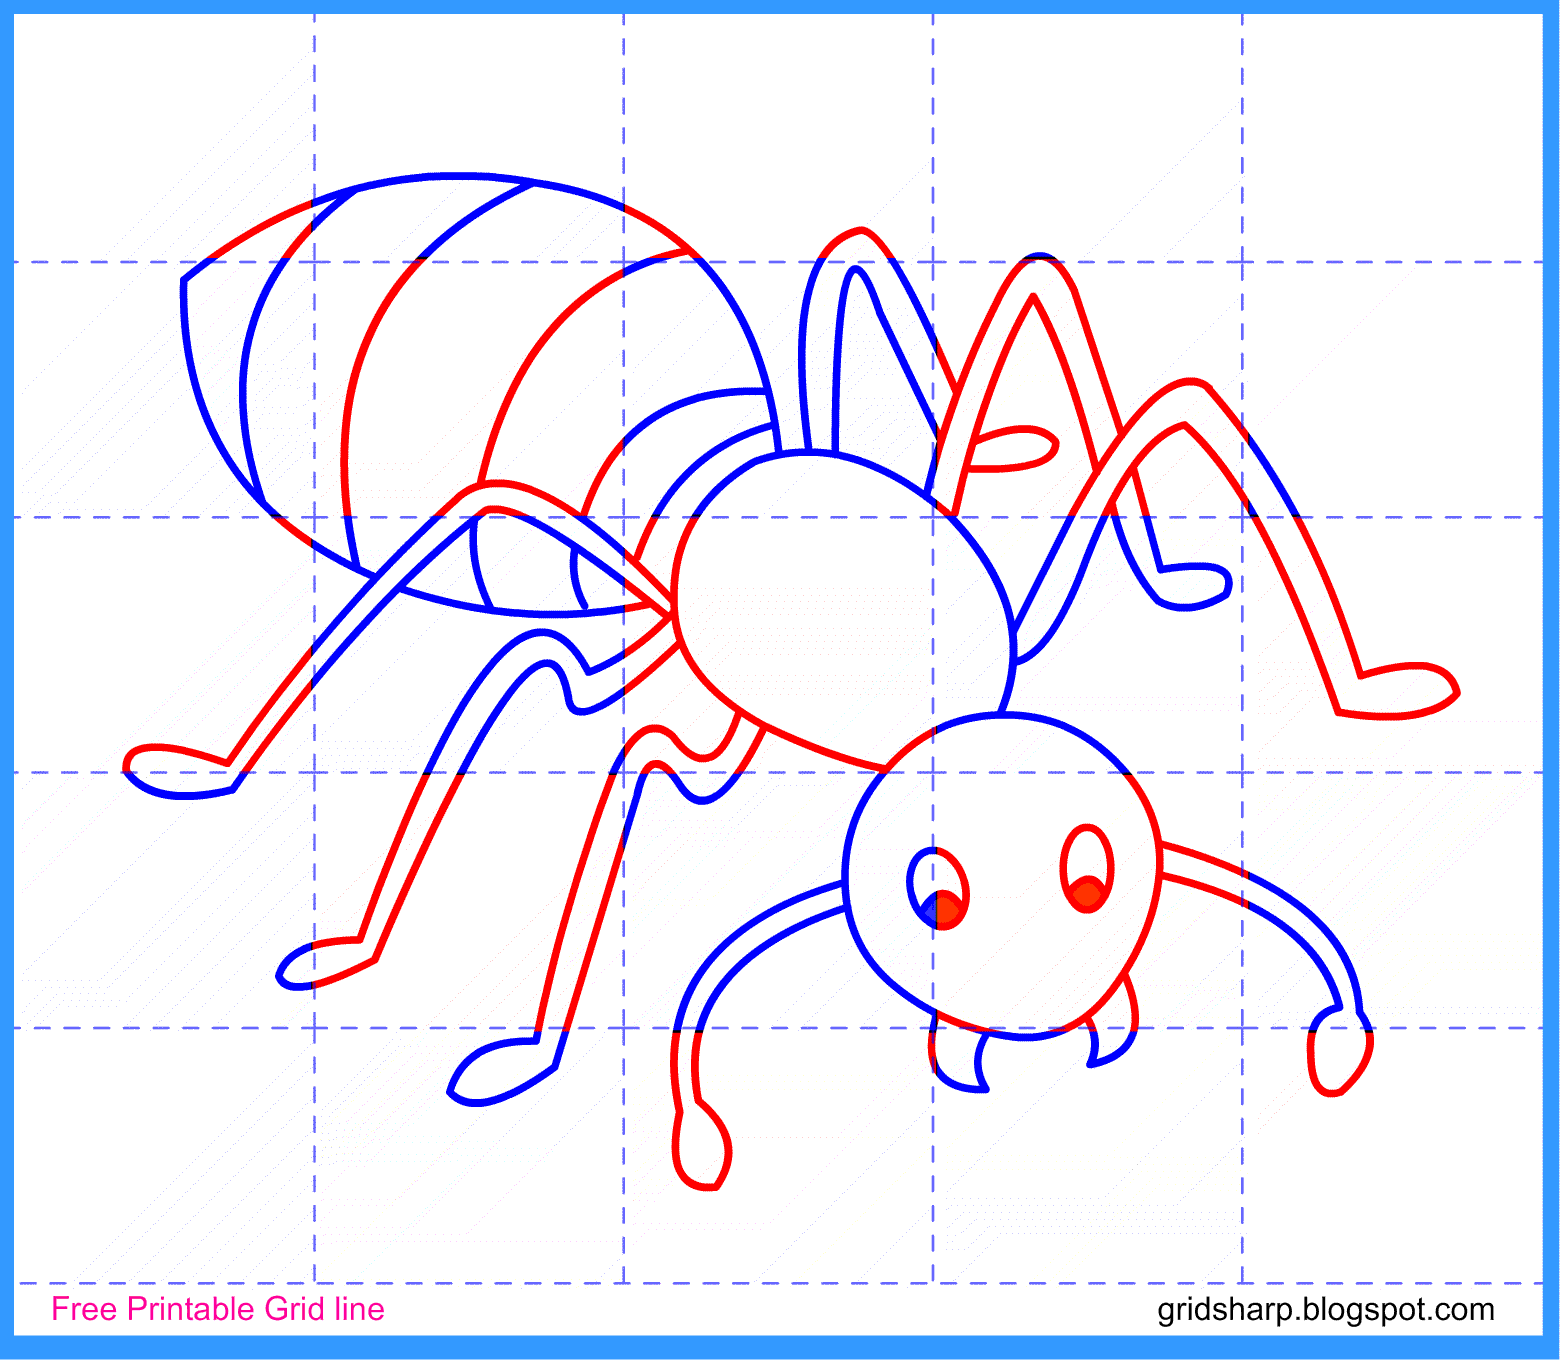 Free Grid line Printable: Ant Grid line Drawing